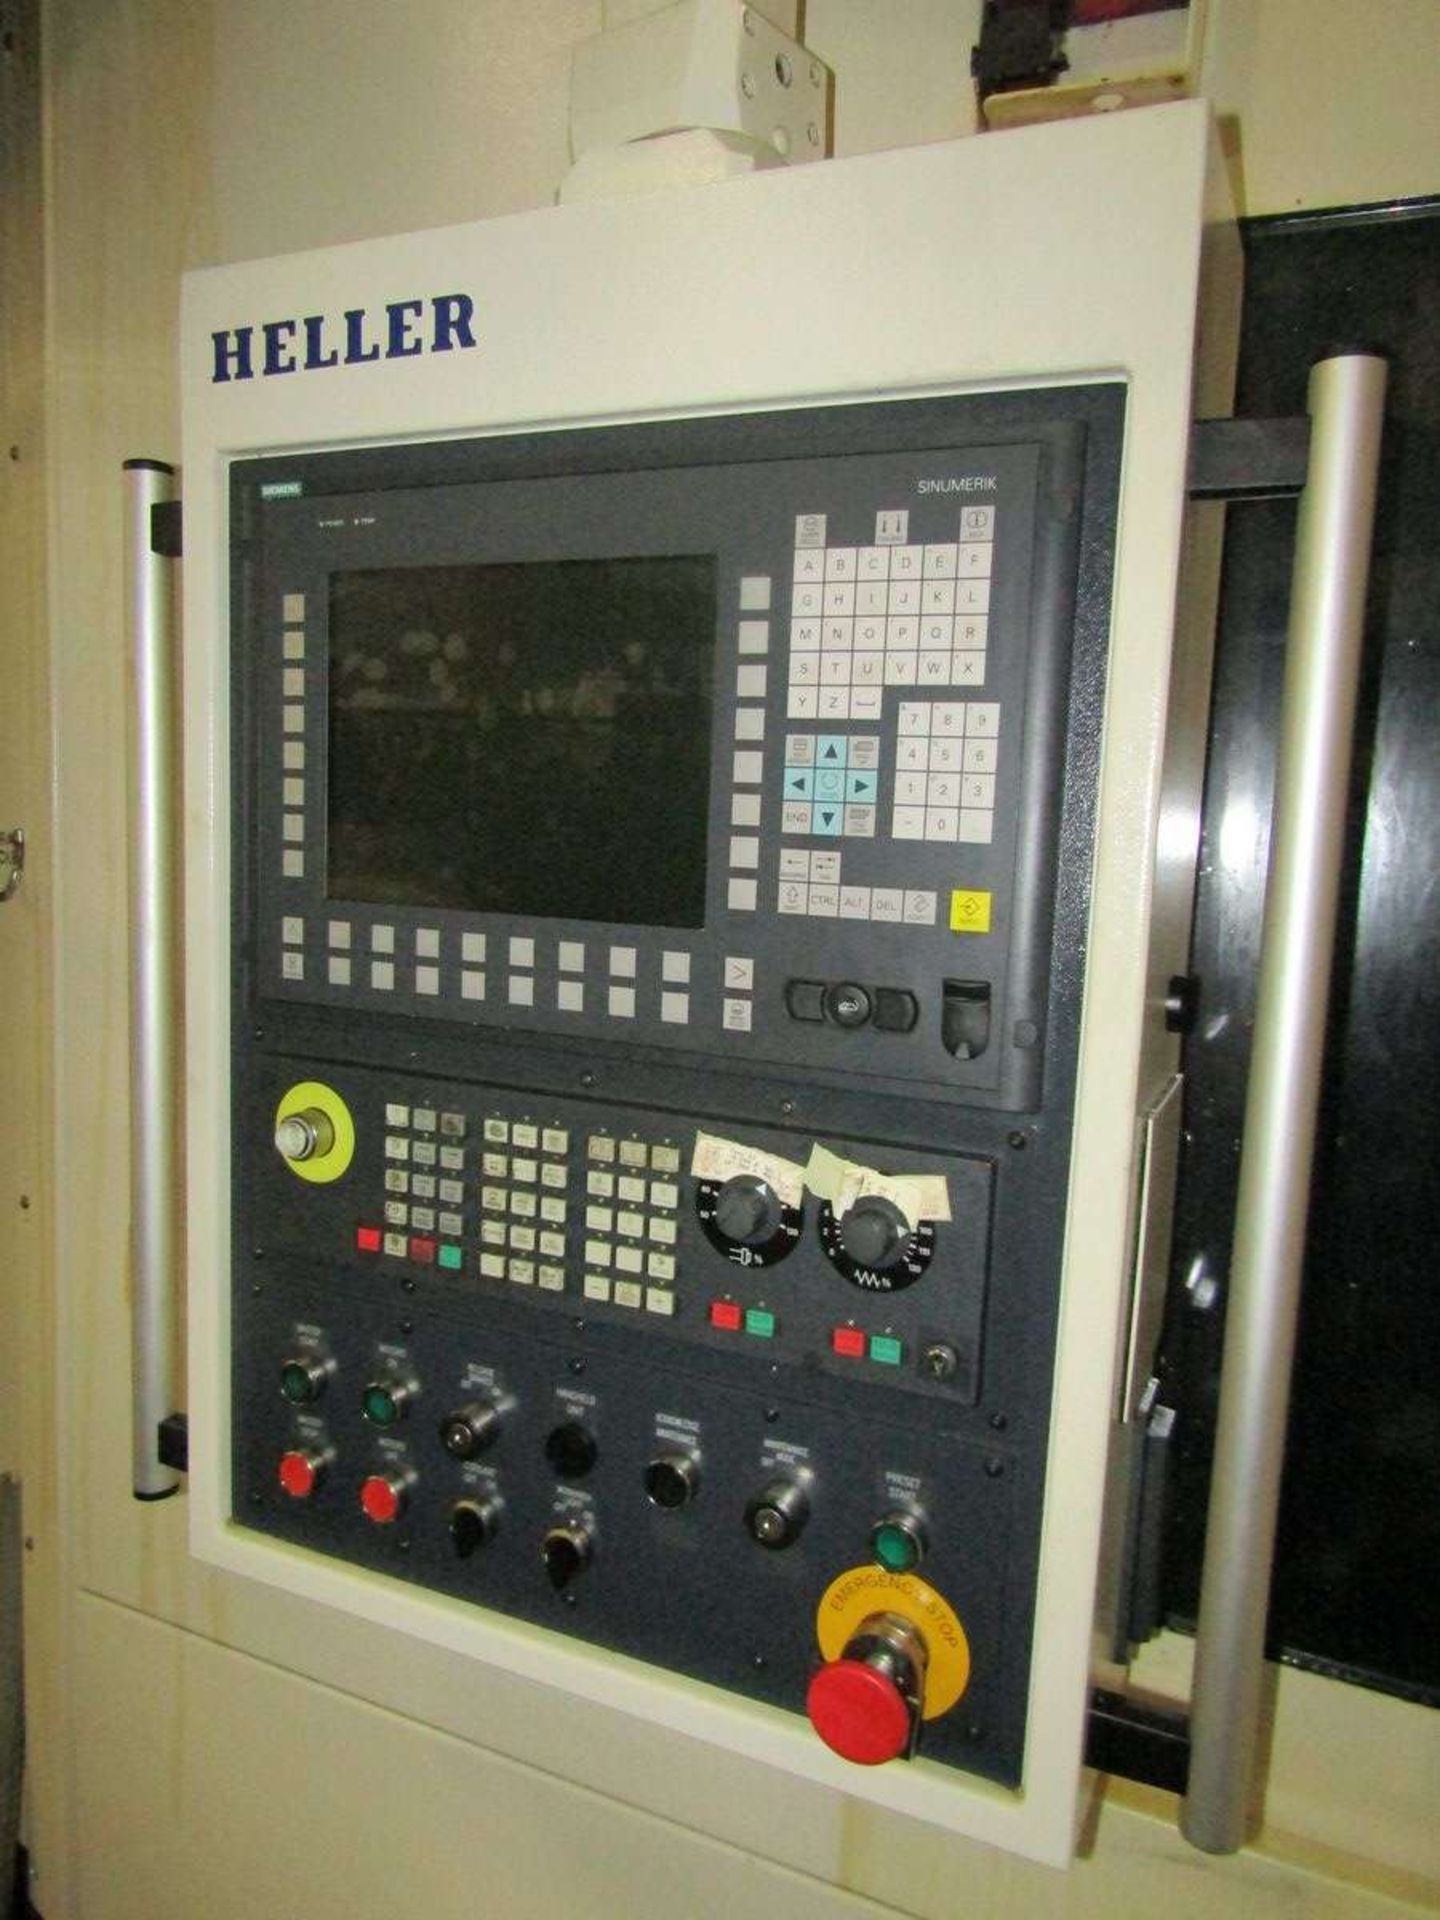 2004 Heller MC16 CNC Horizontal Machining Center - Image 3 of 7